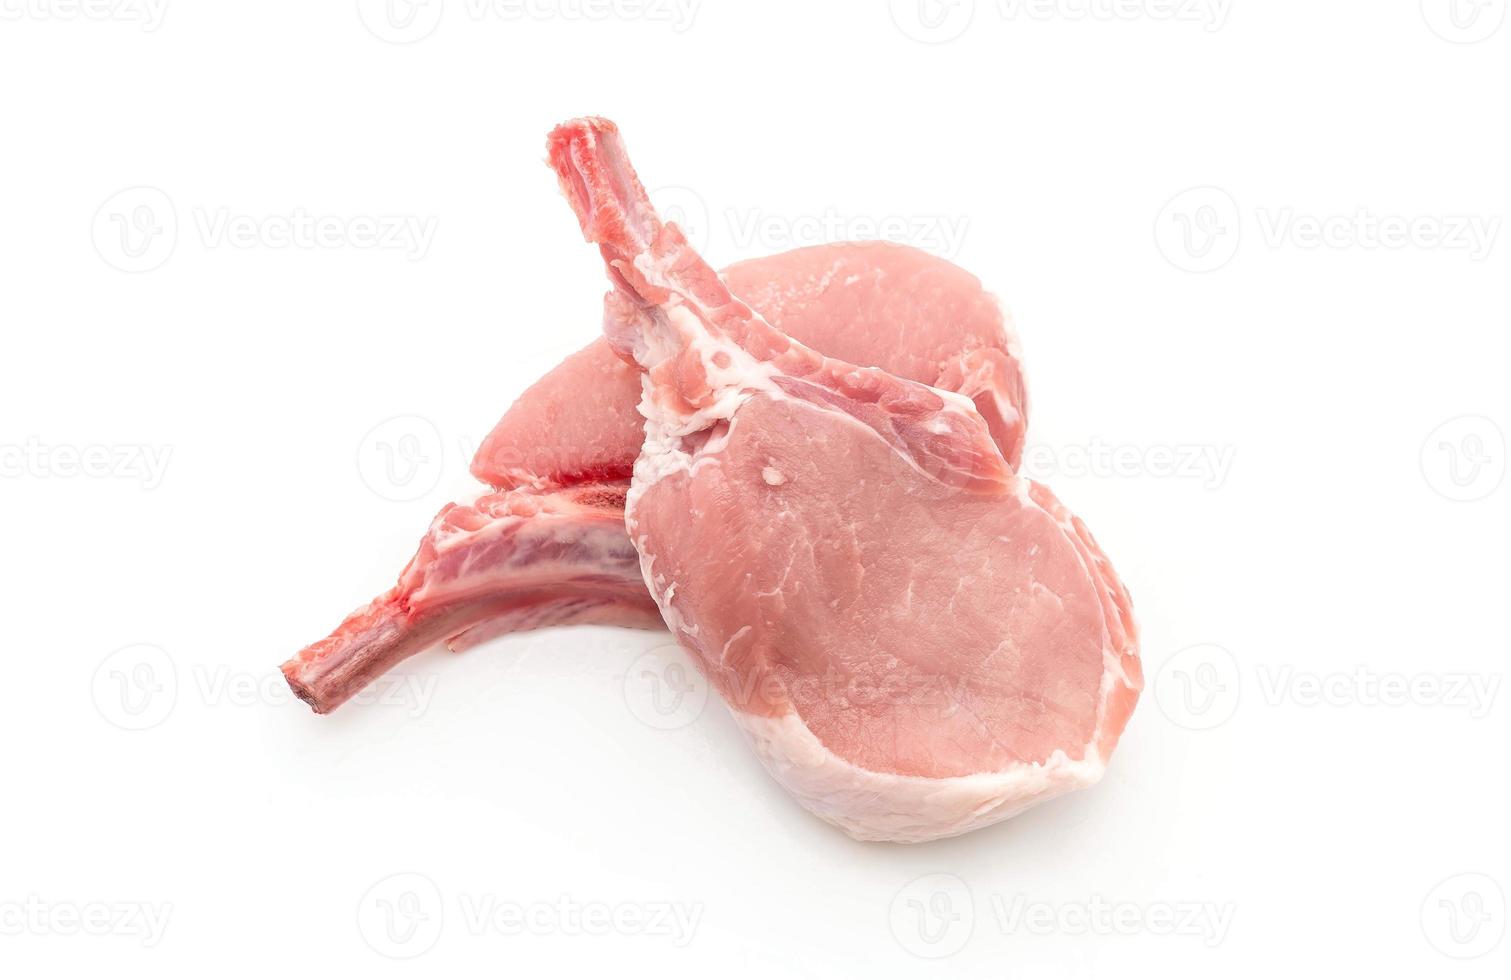 costeleta de porco fresca no fundo branco foto